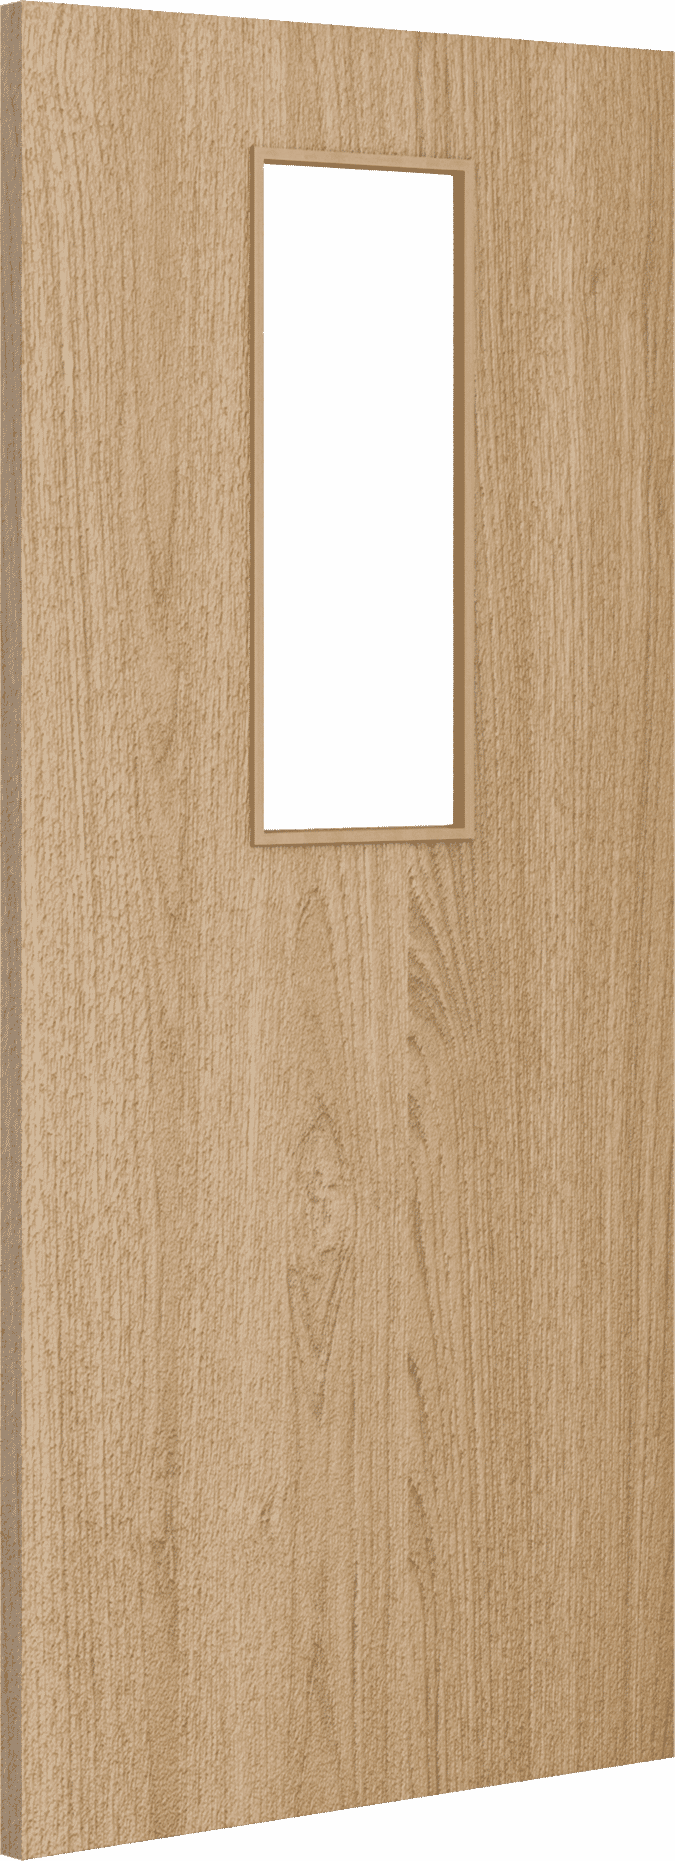 2040mm x 826mm x 44mm Architectural Oak 14 Frosted Glazed - Prefinished FD30 Fire Door Blank